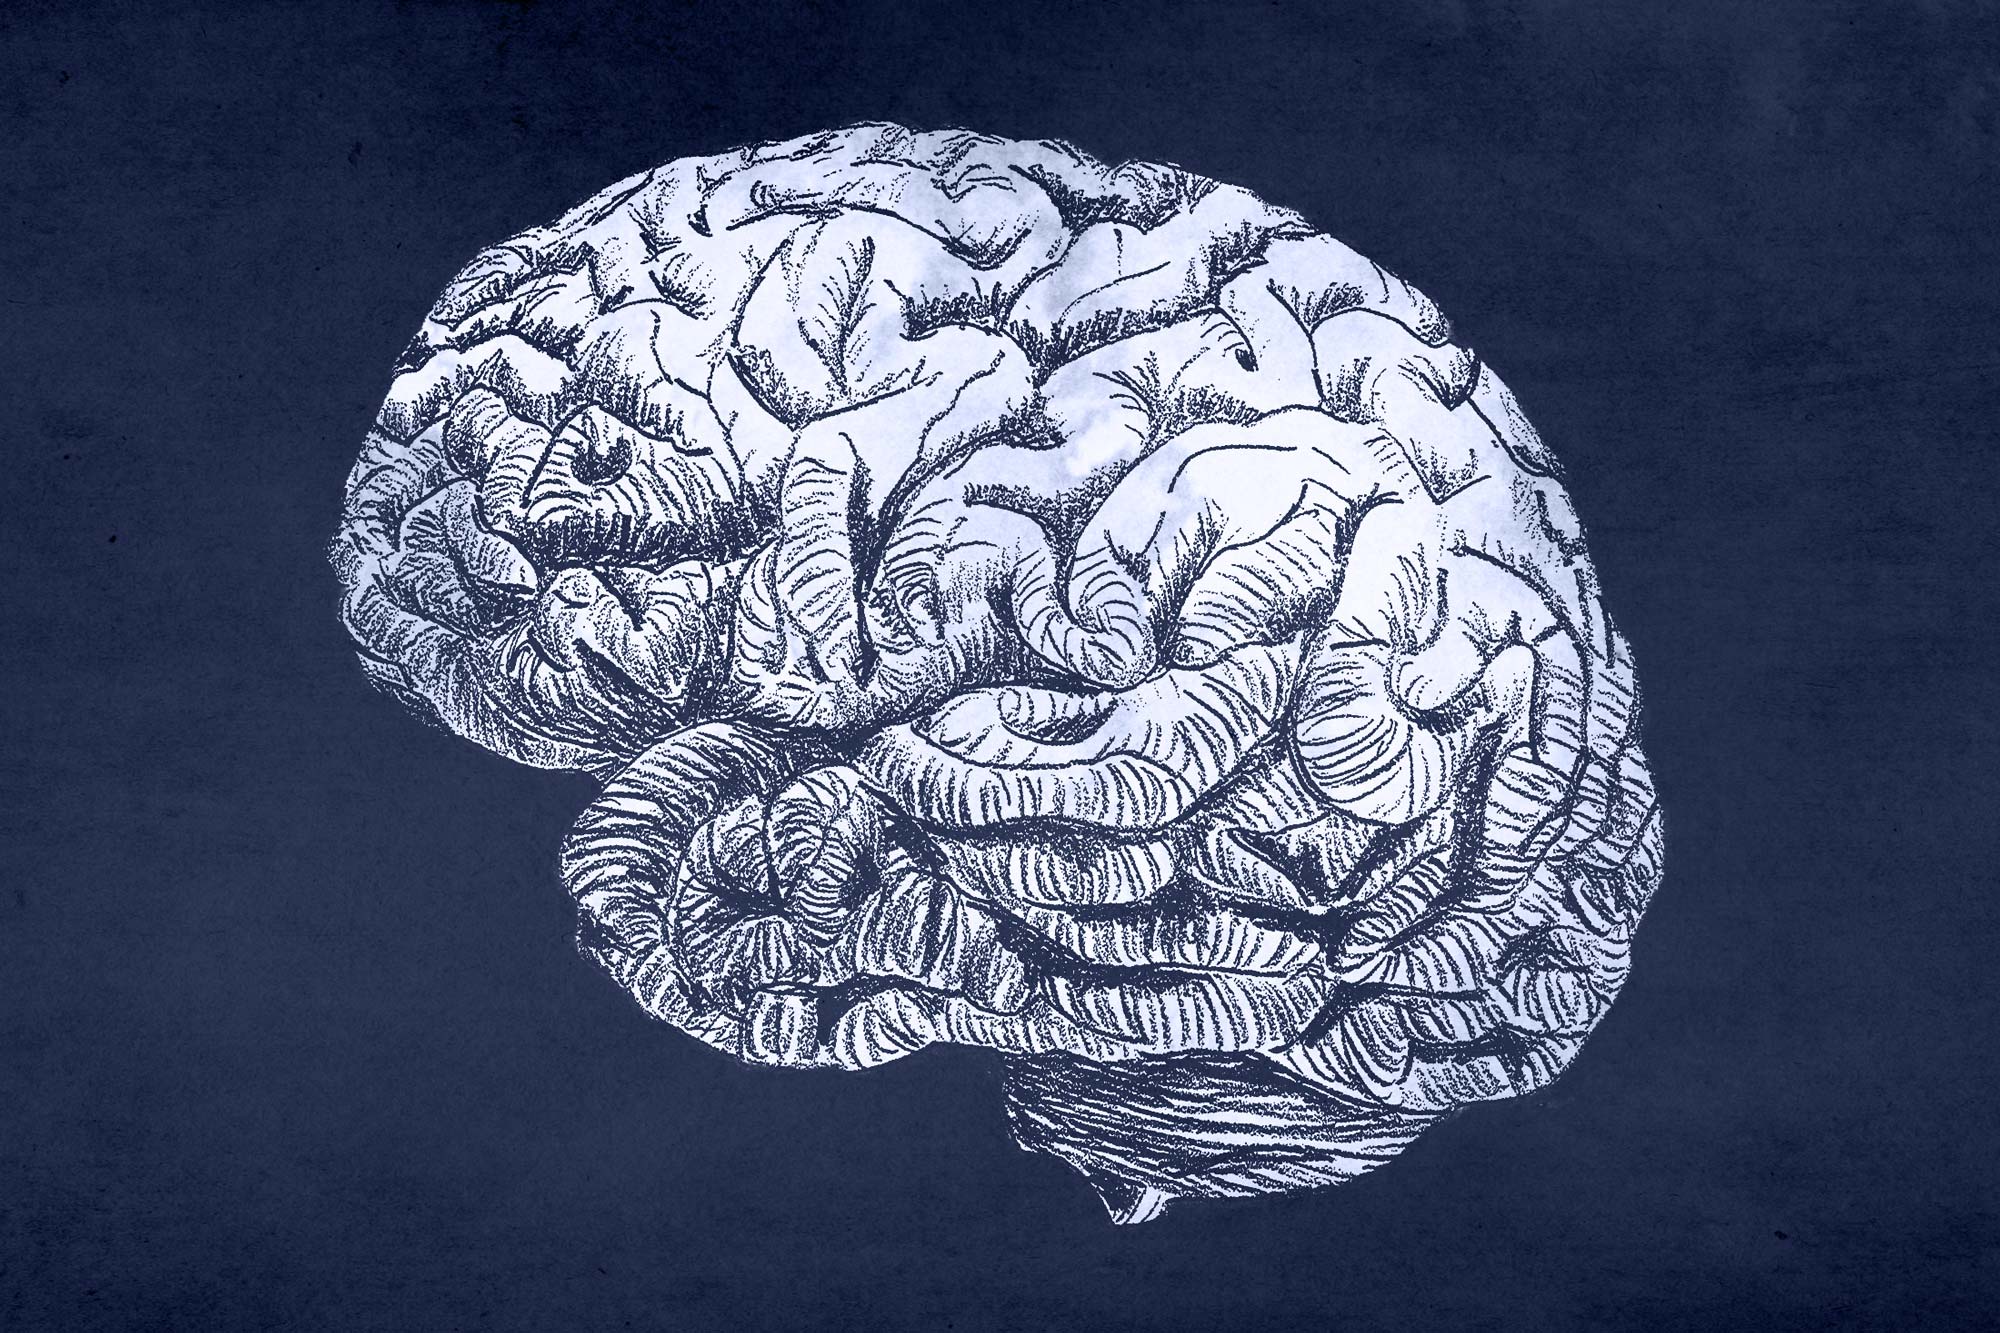 Illustration of a brain on a dark blue background